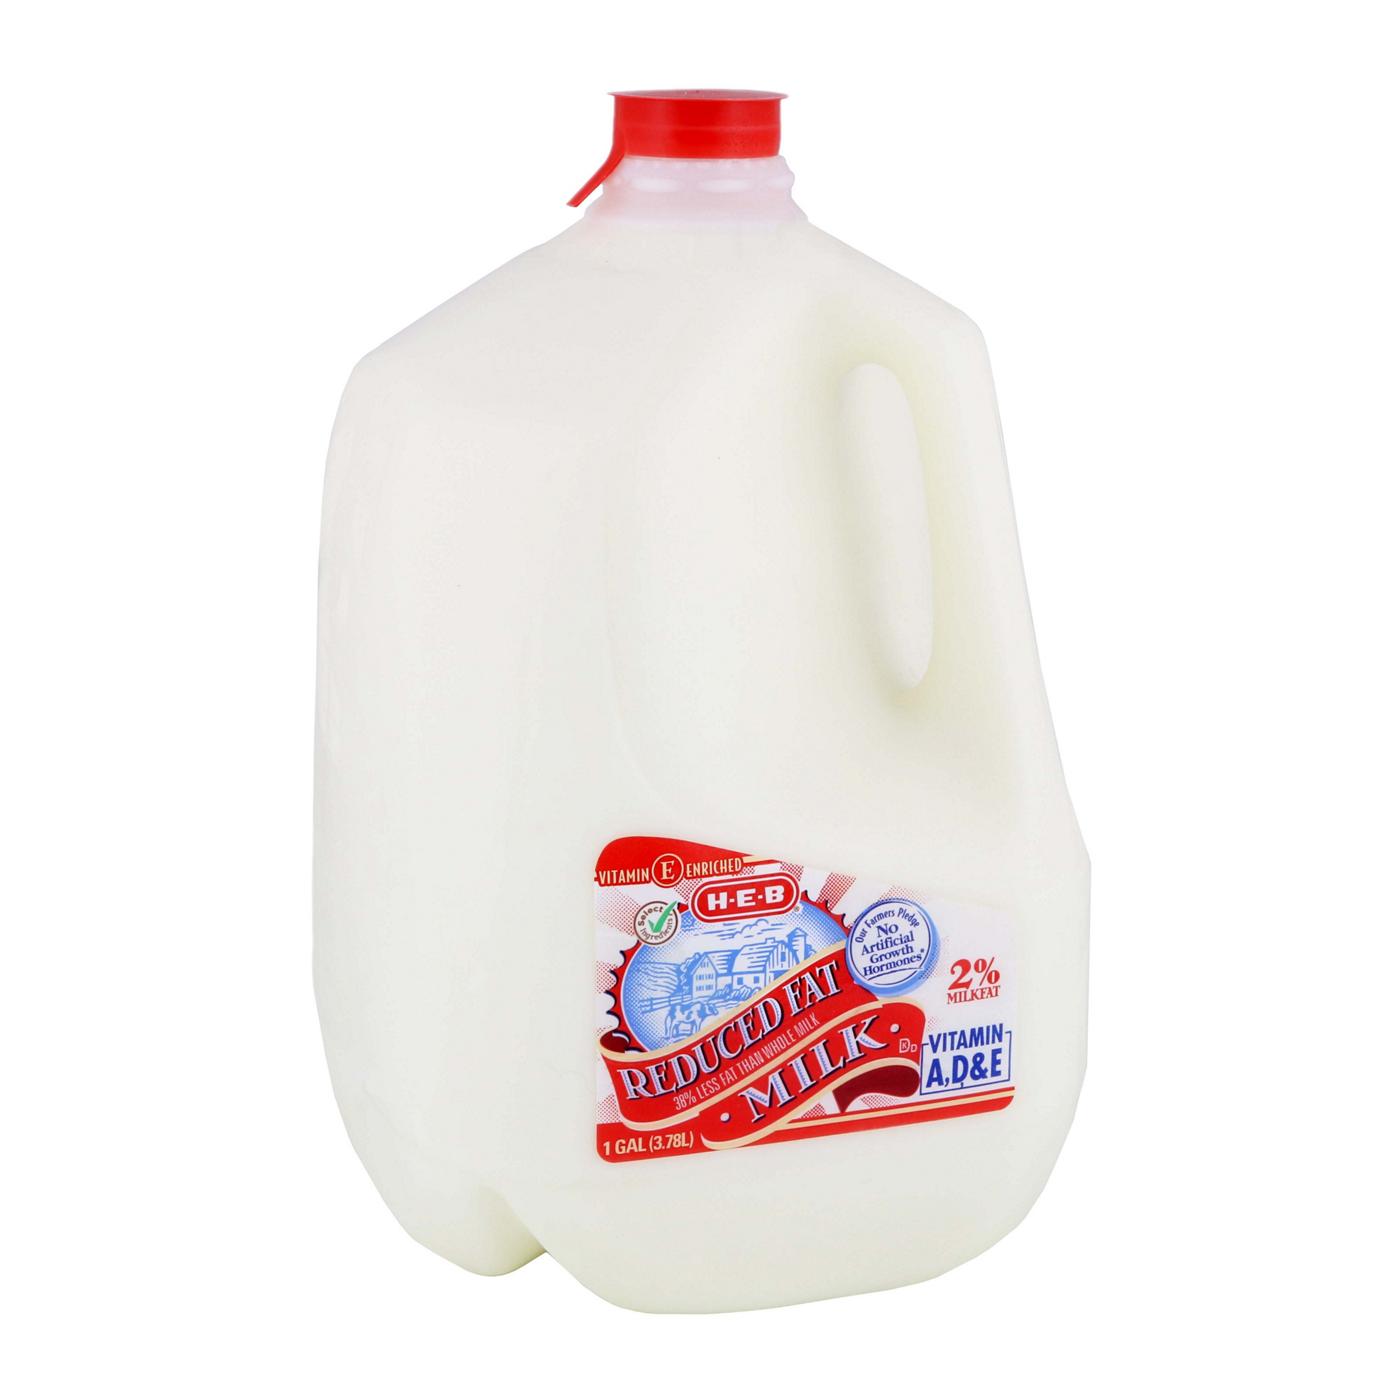 H-E-B 2% Reduced Fat Milk; image 1 of 2